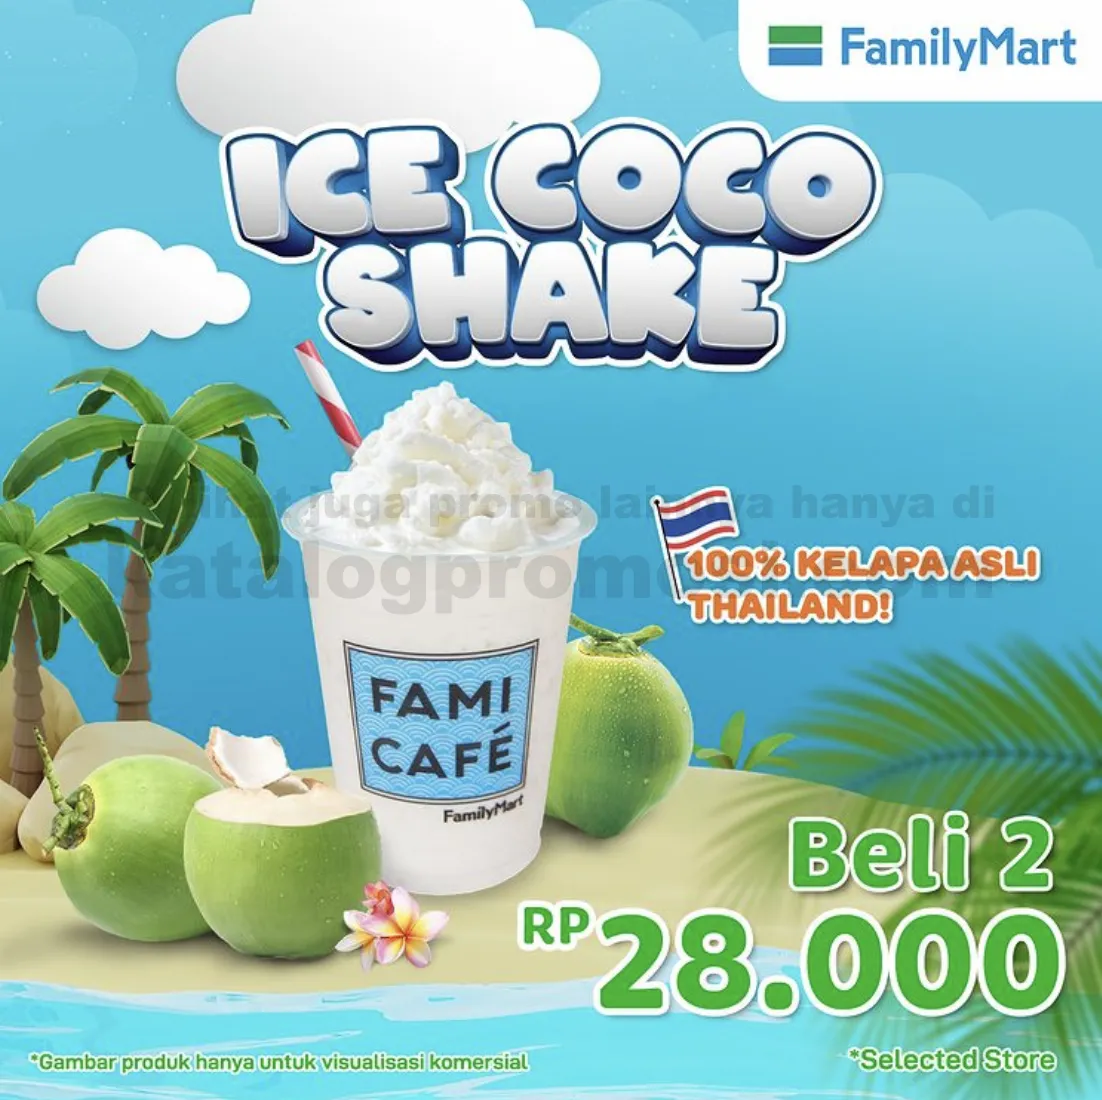 FAMILYMART Promo ICE COCO SHAKE - Harga Spesial Hanya BELI 2 Rp. 28.000